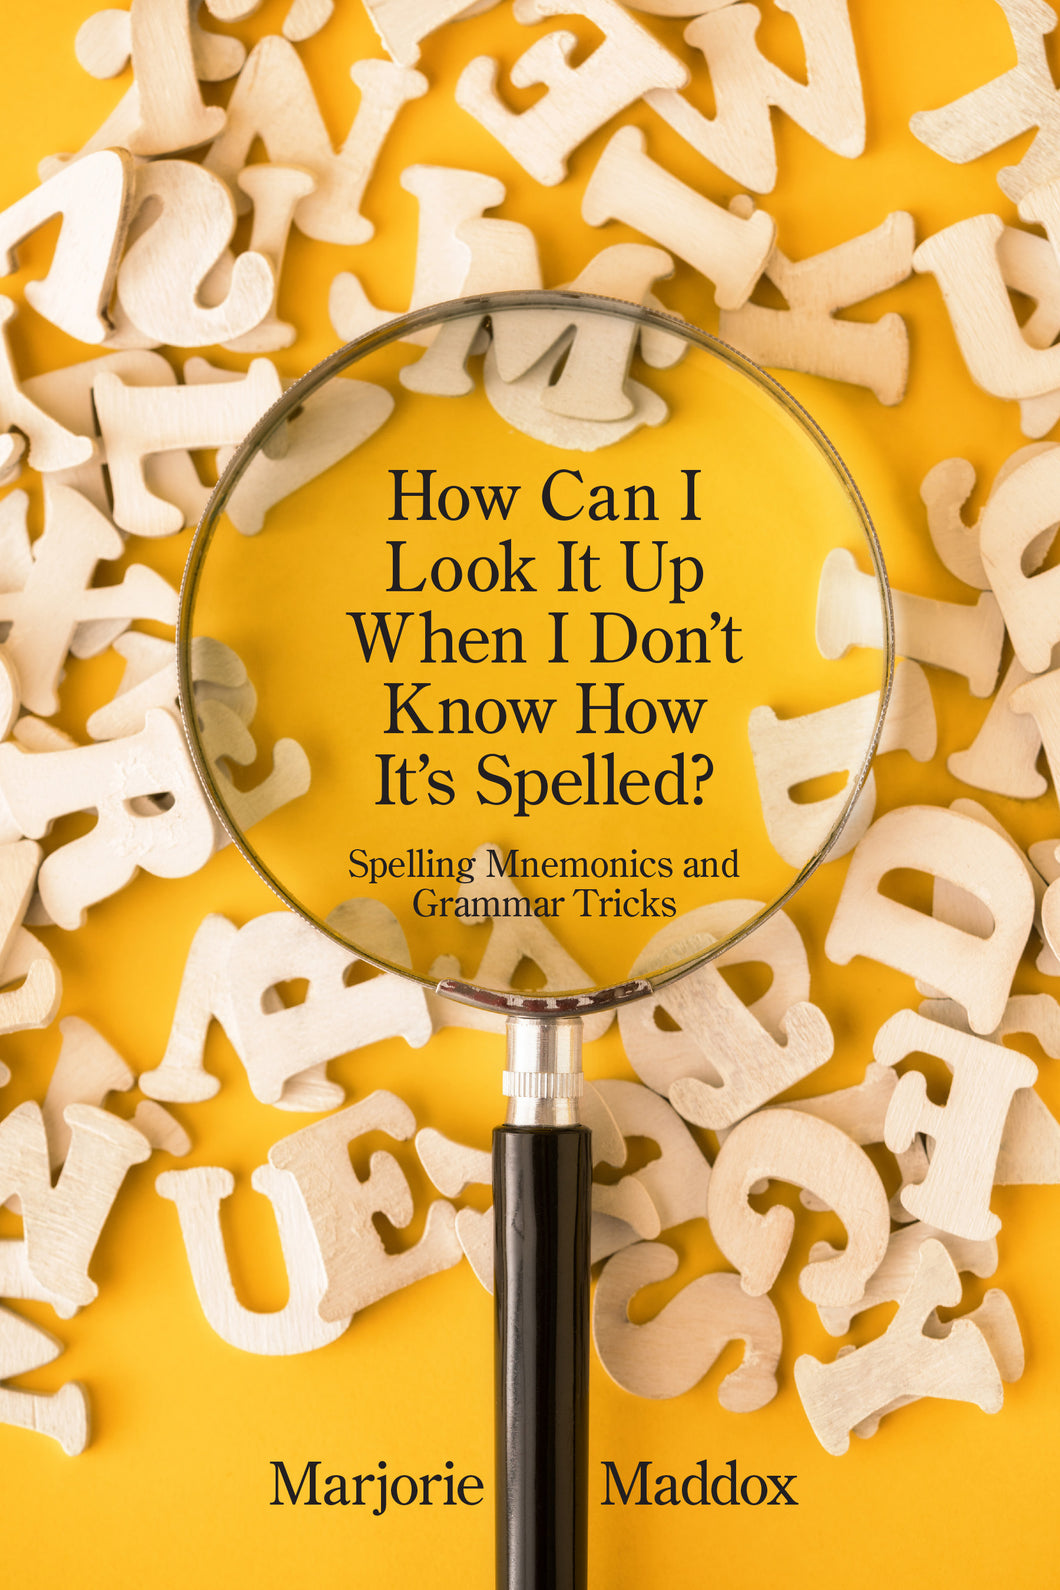 How Can I Look It Up When I Don’t Know How It’s Spelled?: Spelling Mnemonics and Grammar Tricks